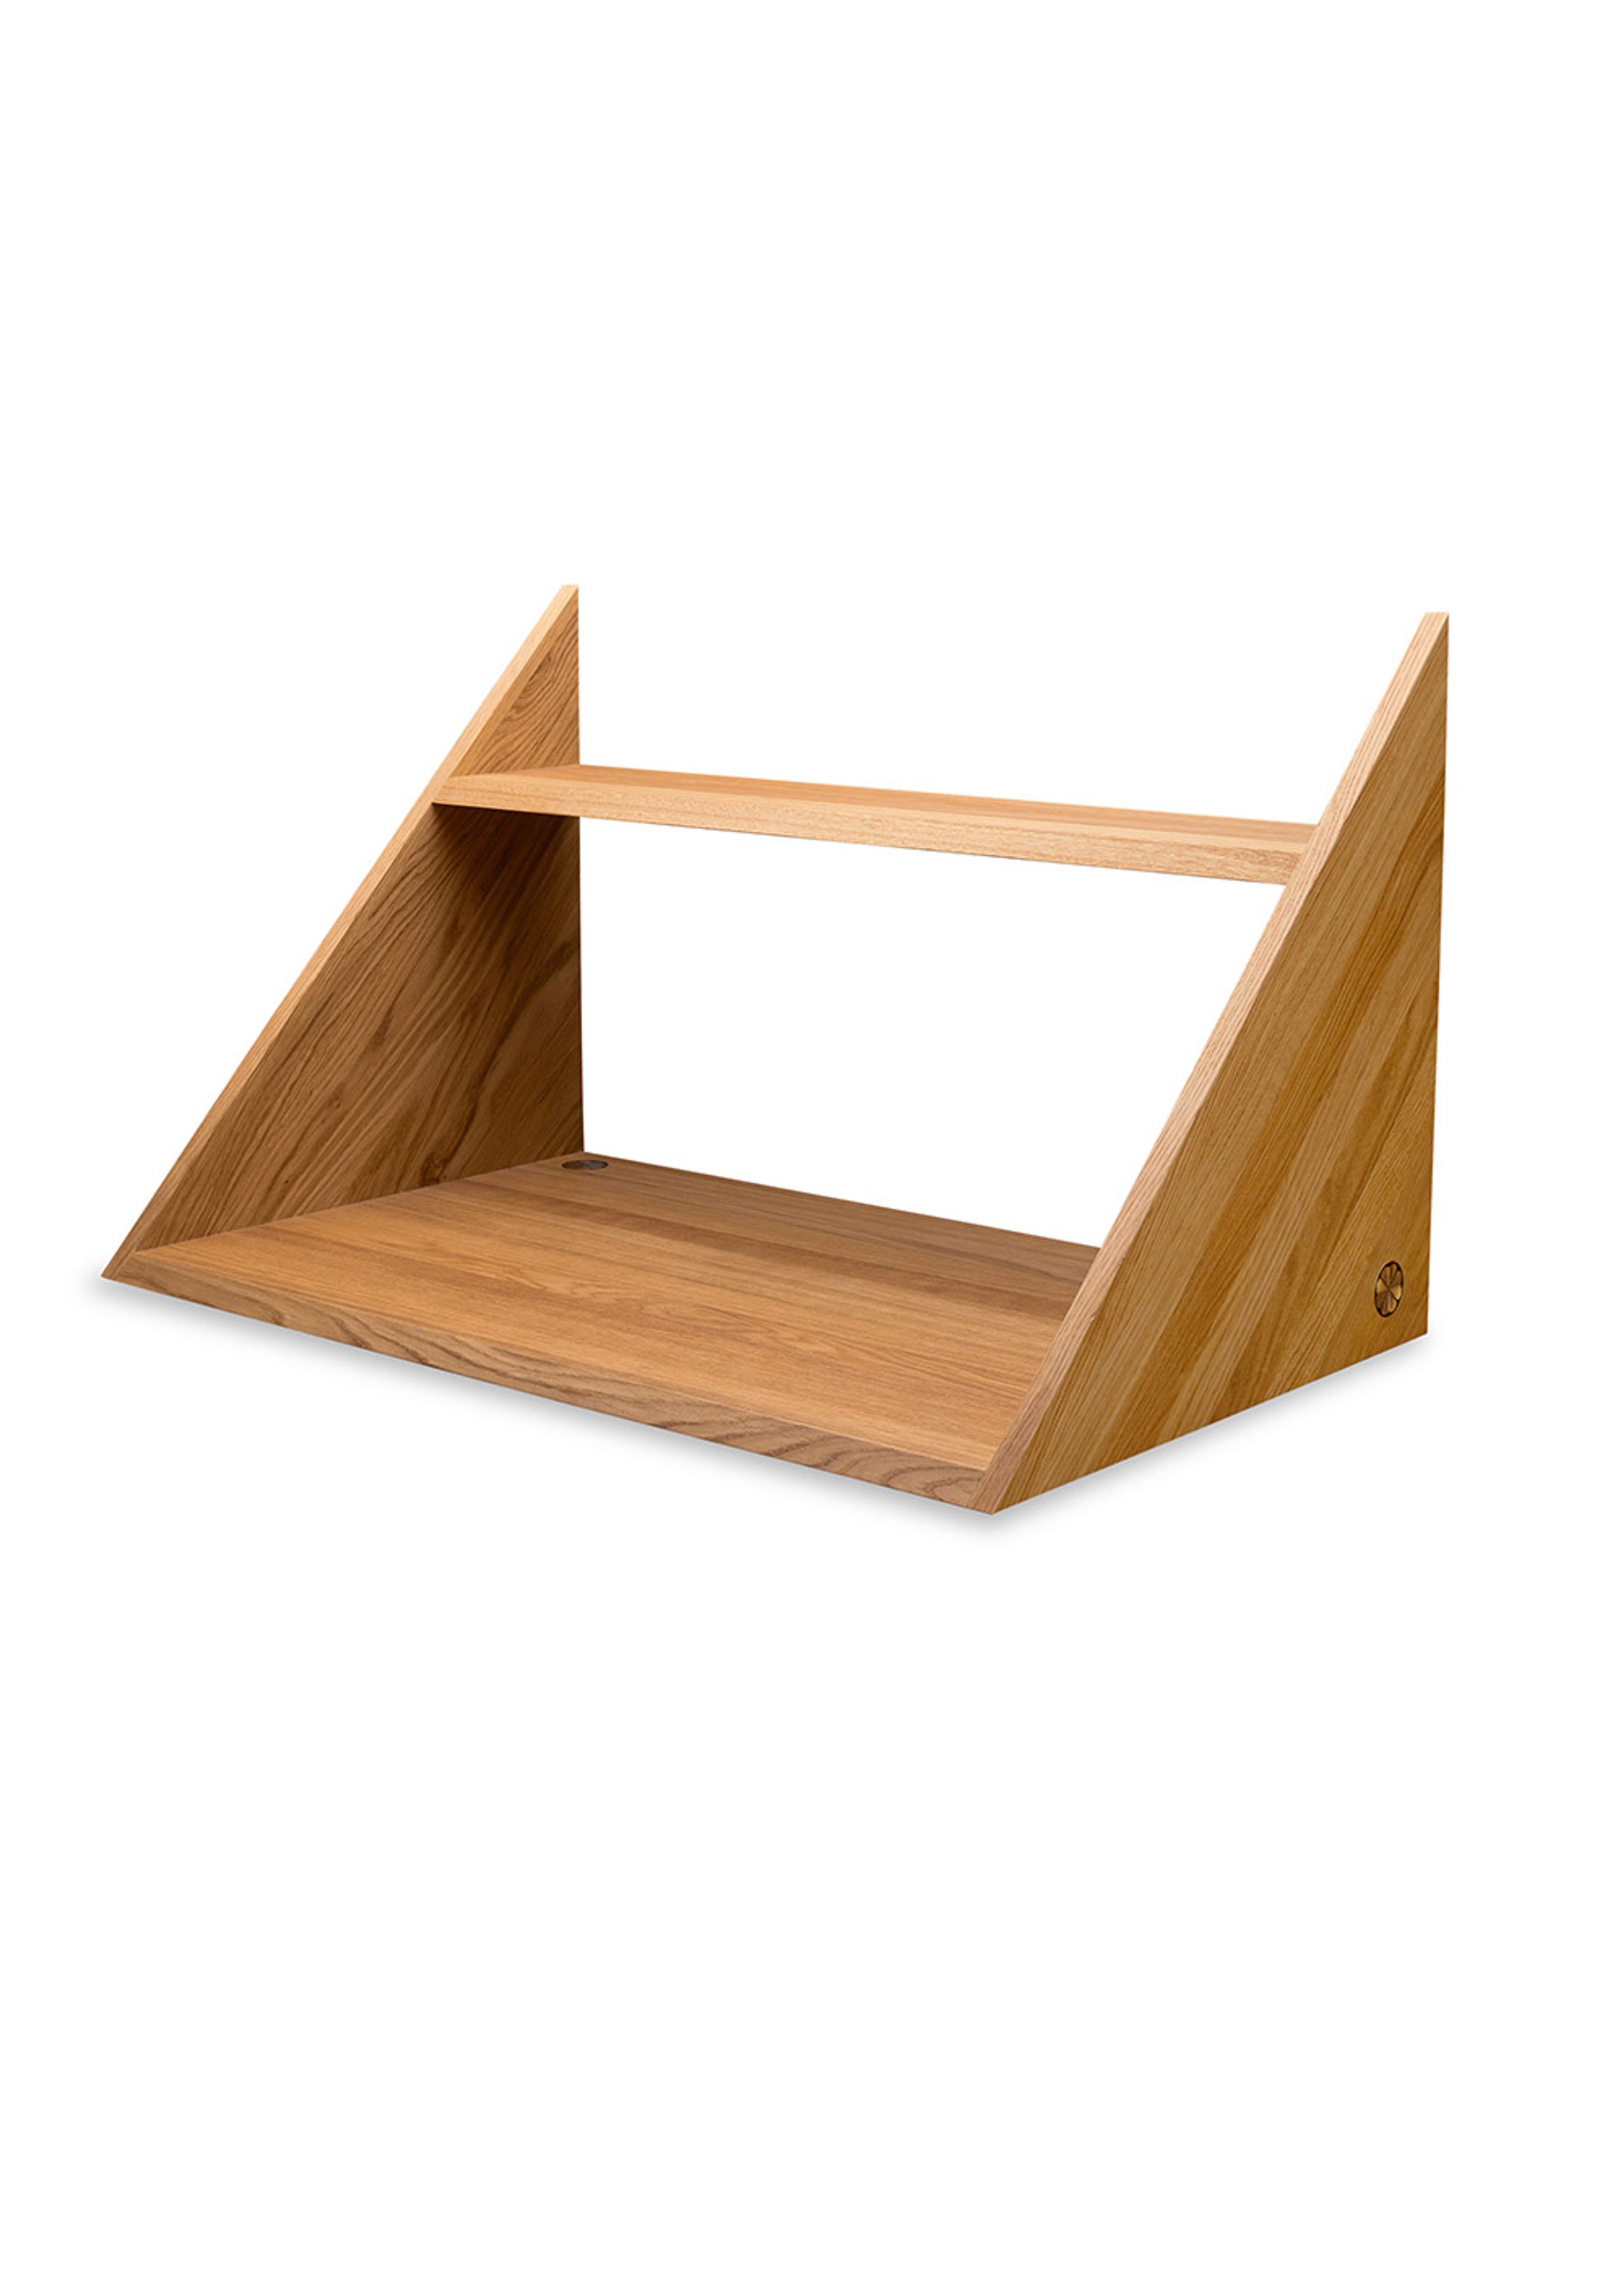 Sibast Furniture - Desk - Xlibris Wall Desk - Natural Oiled Oak